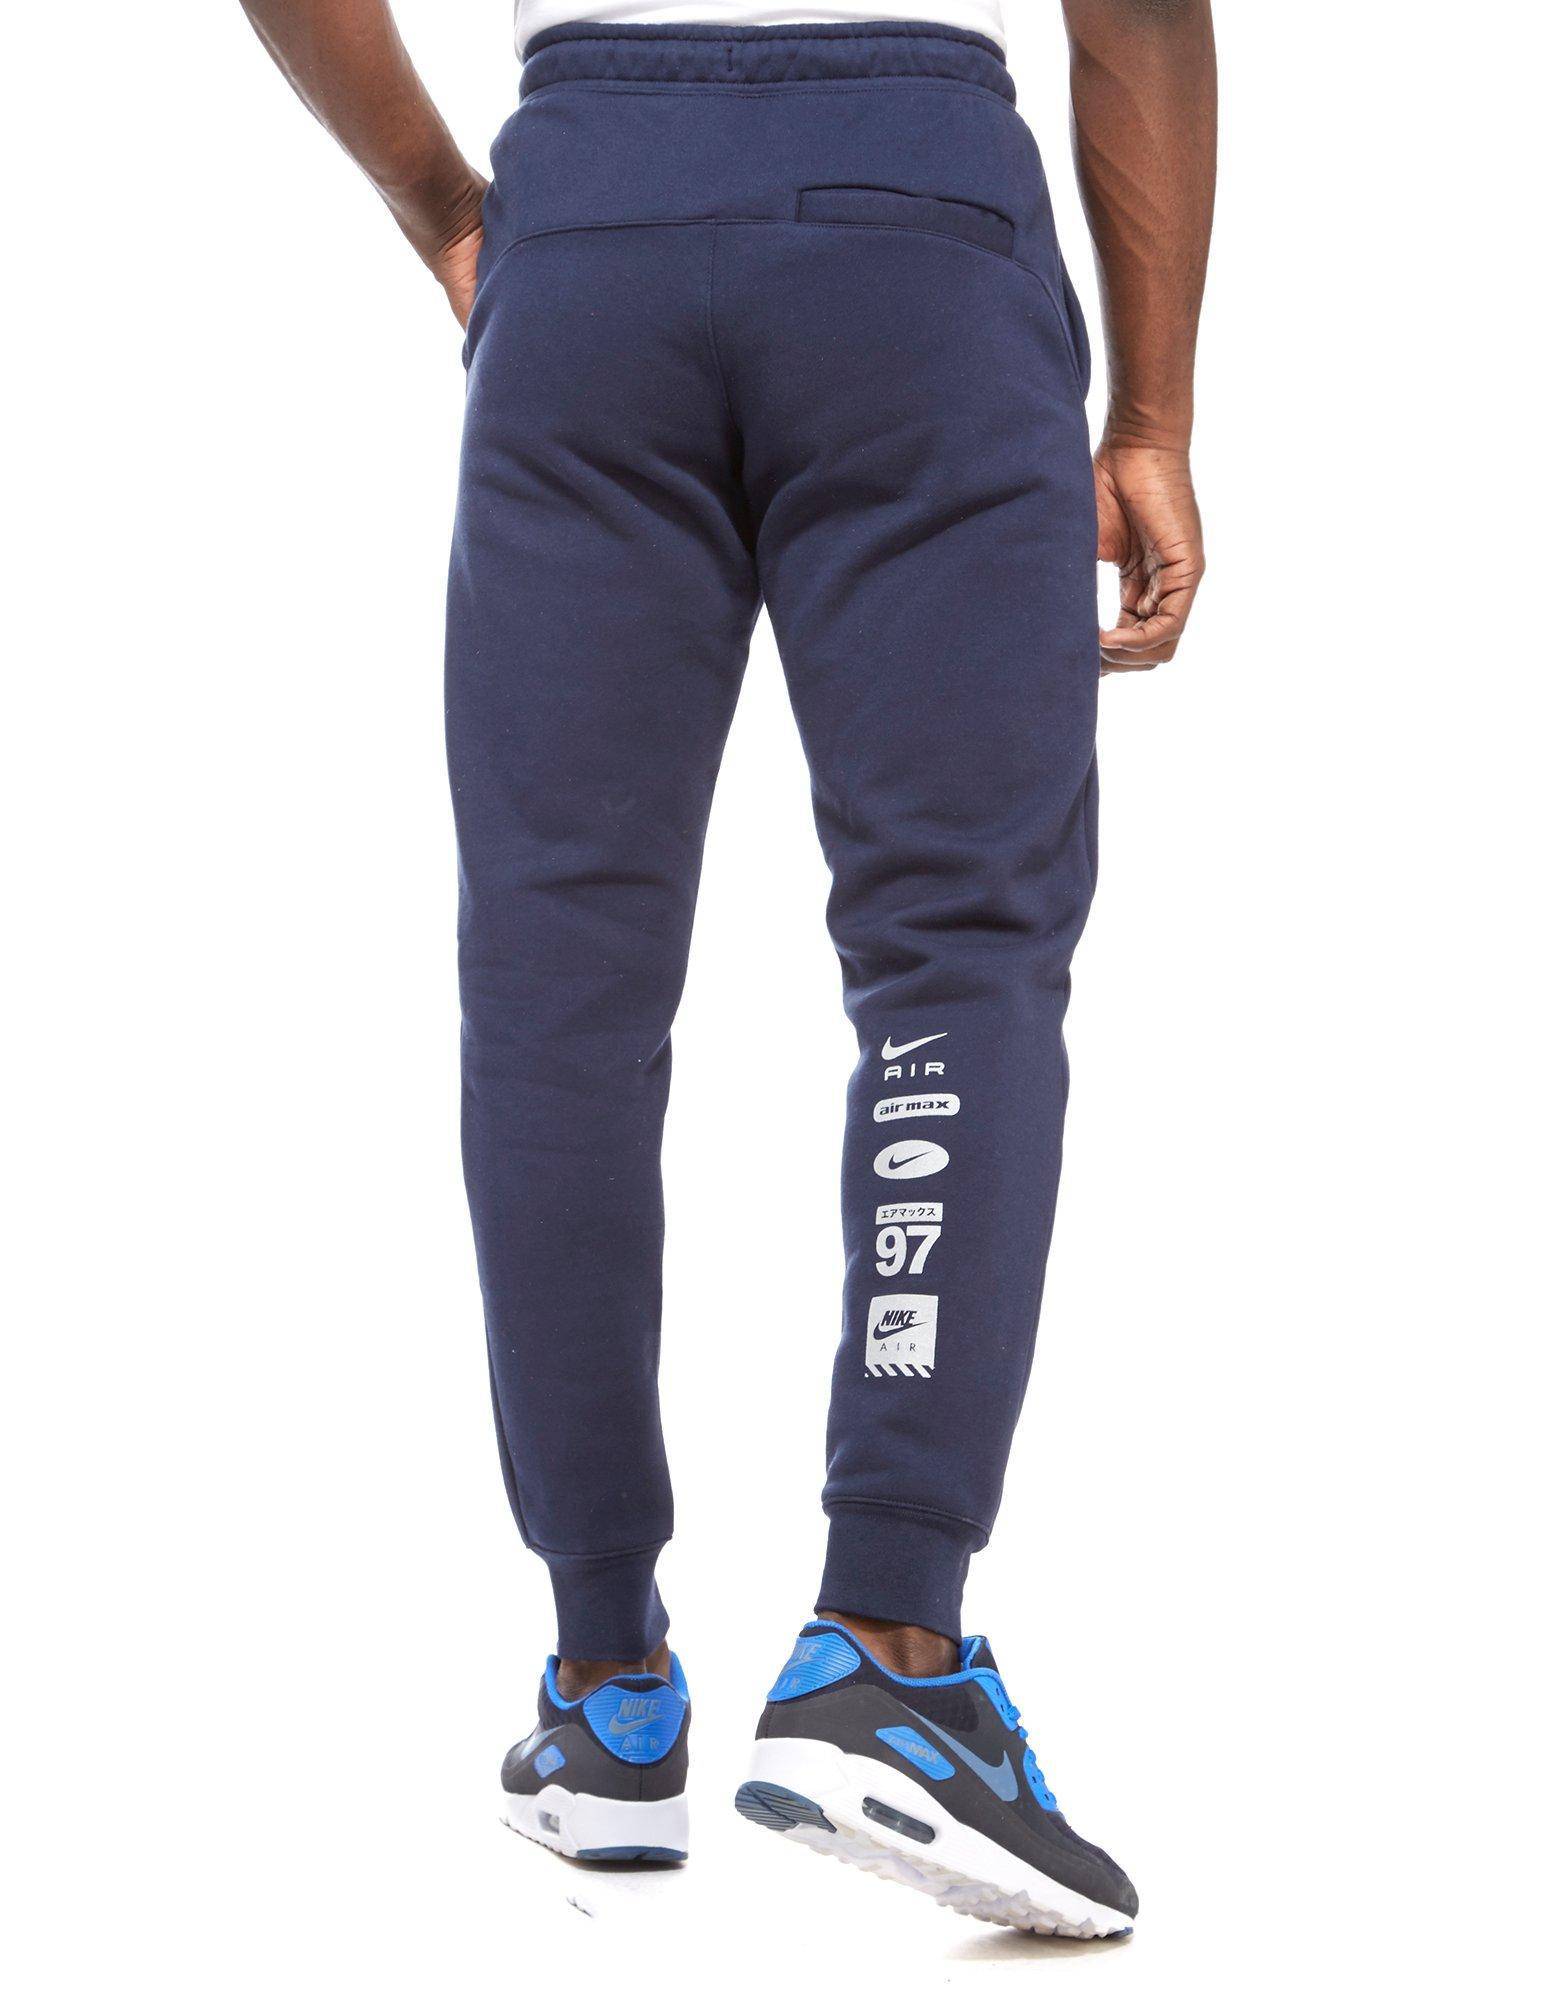 Nike Cotton Air Hybrid Jogging Pants in Blue/Grey (Blue) for Men - Lyst